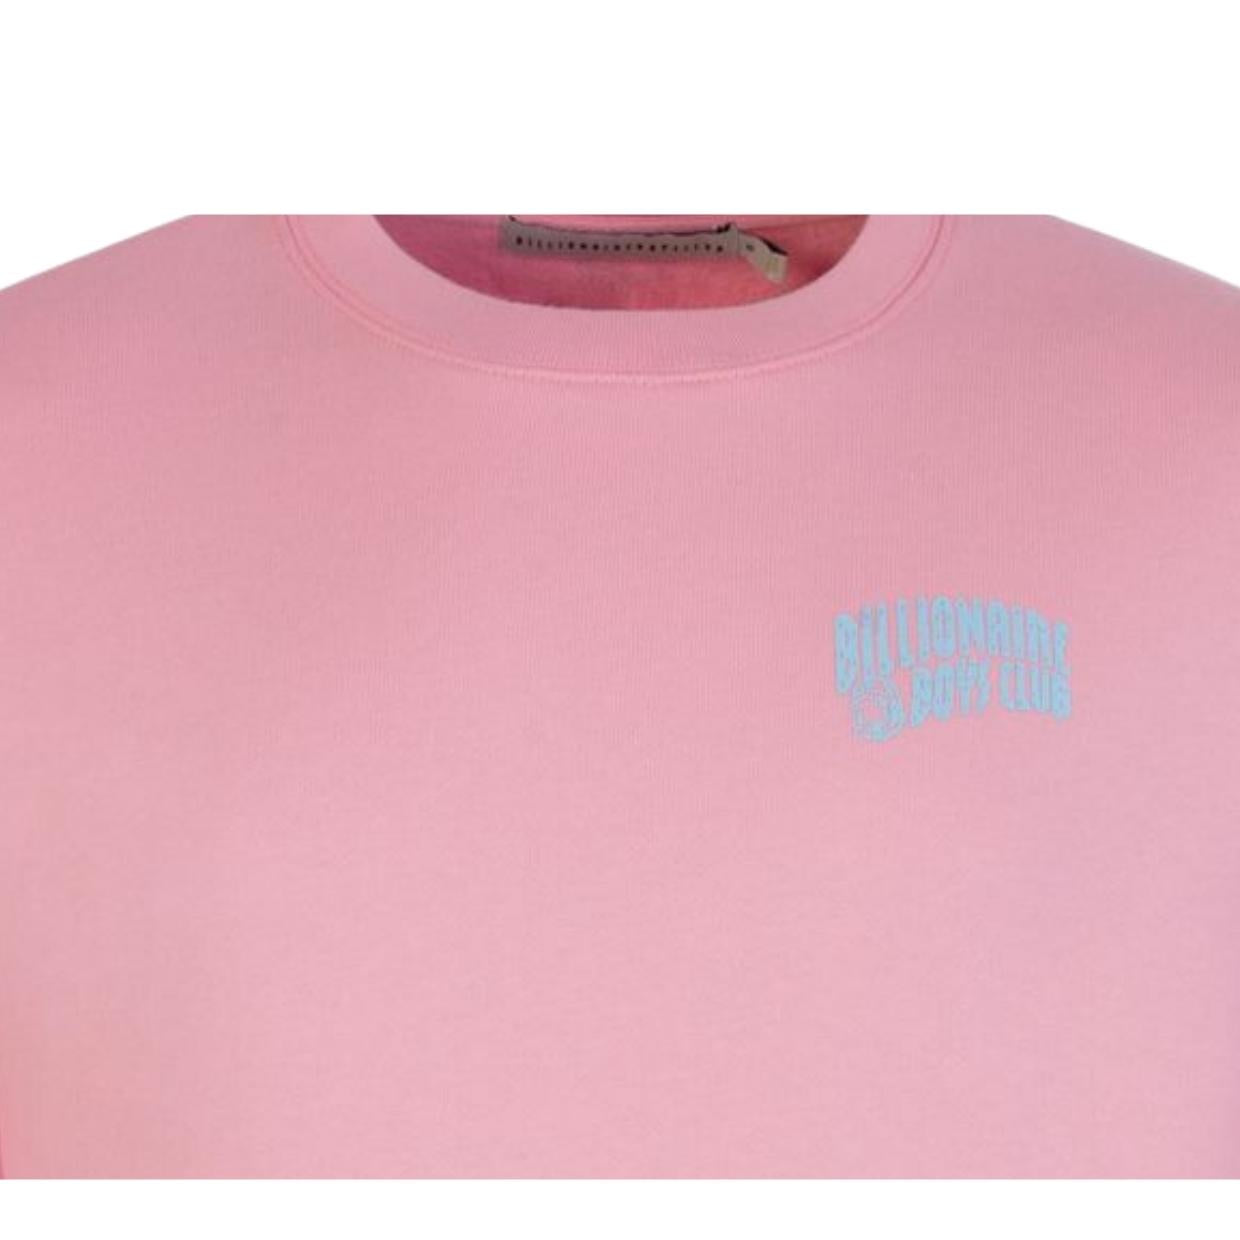 Billionaire Boys Club Small Arch Logo Pink Sweatshirt